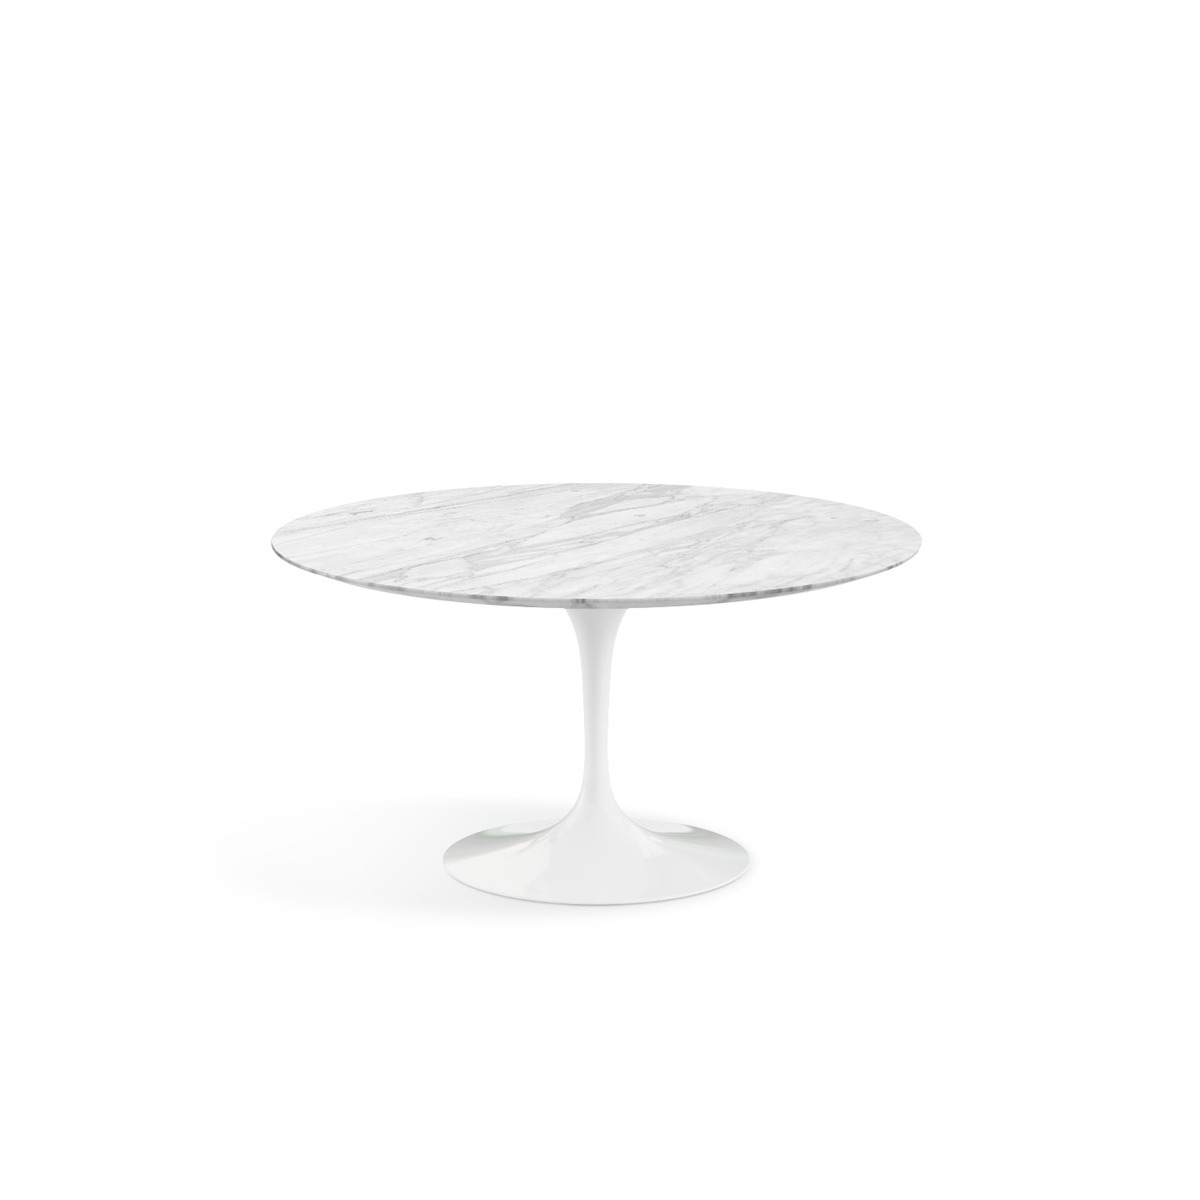 KNOLL Saarinen Round Dining Table - 137cm